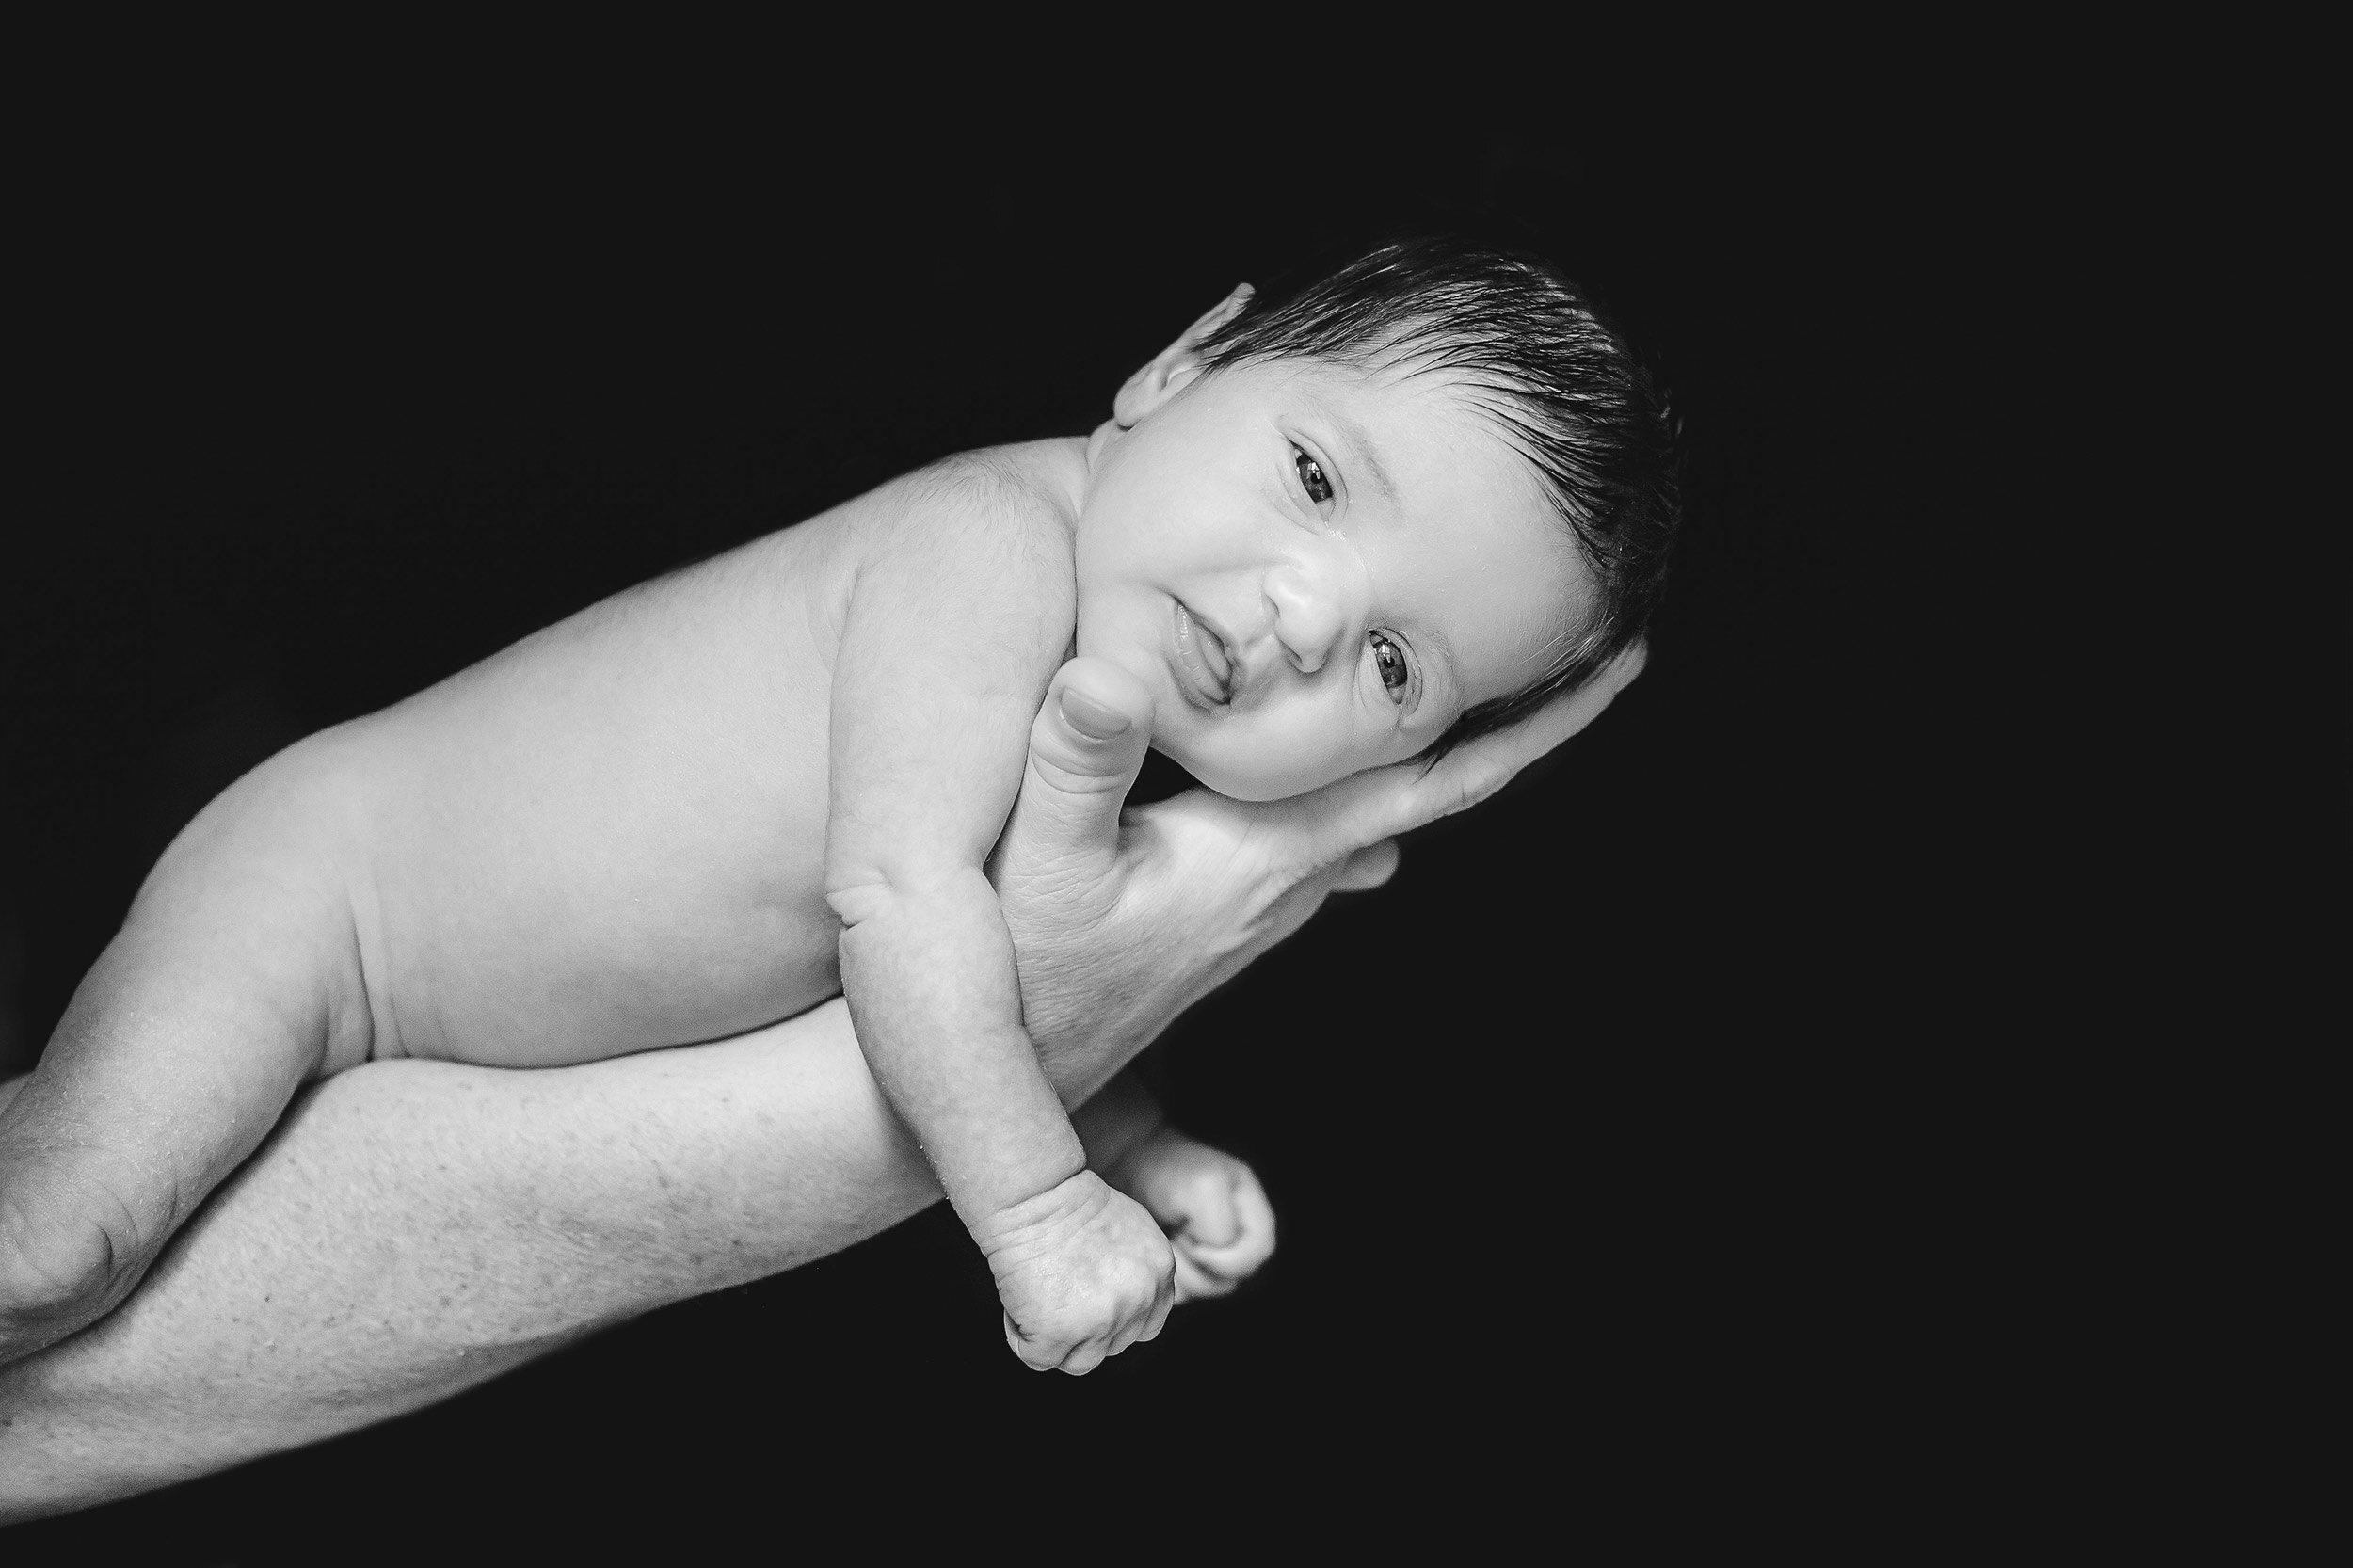 Newburyport Newborn Portrait Photographer | Stephen Grant Photography